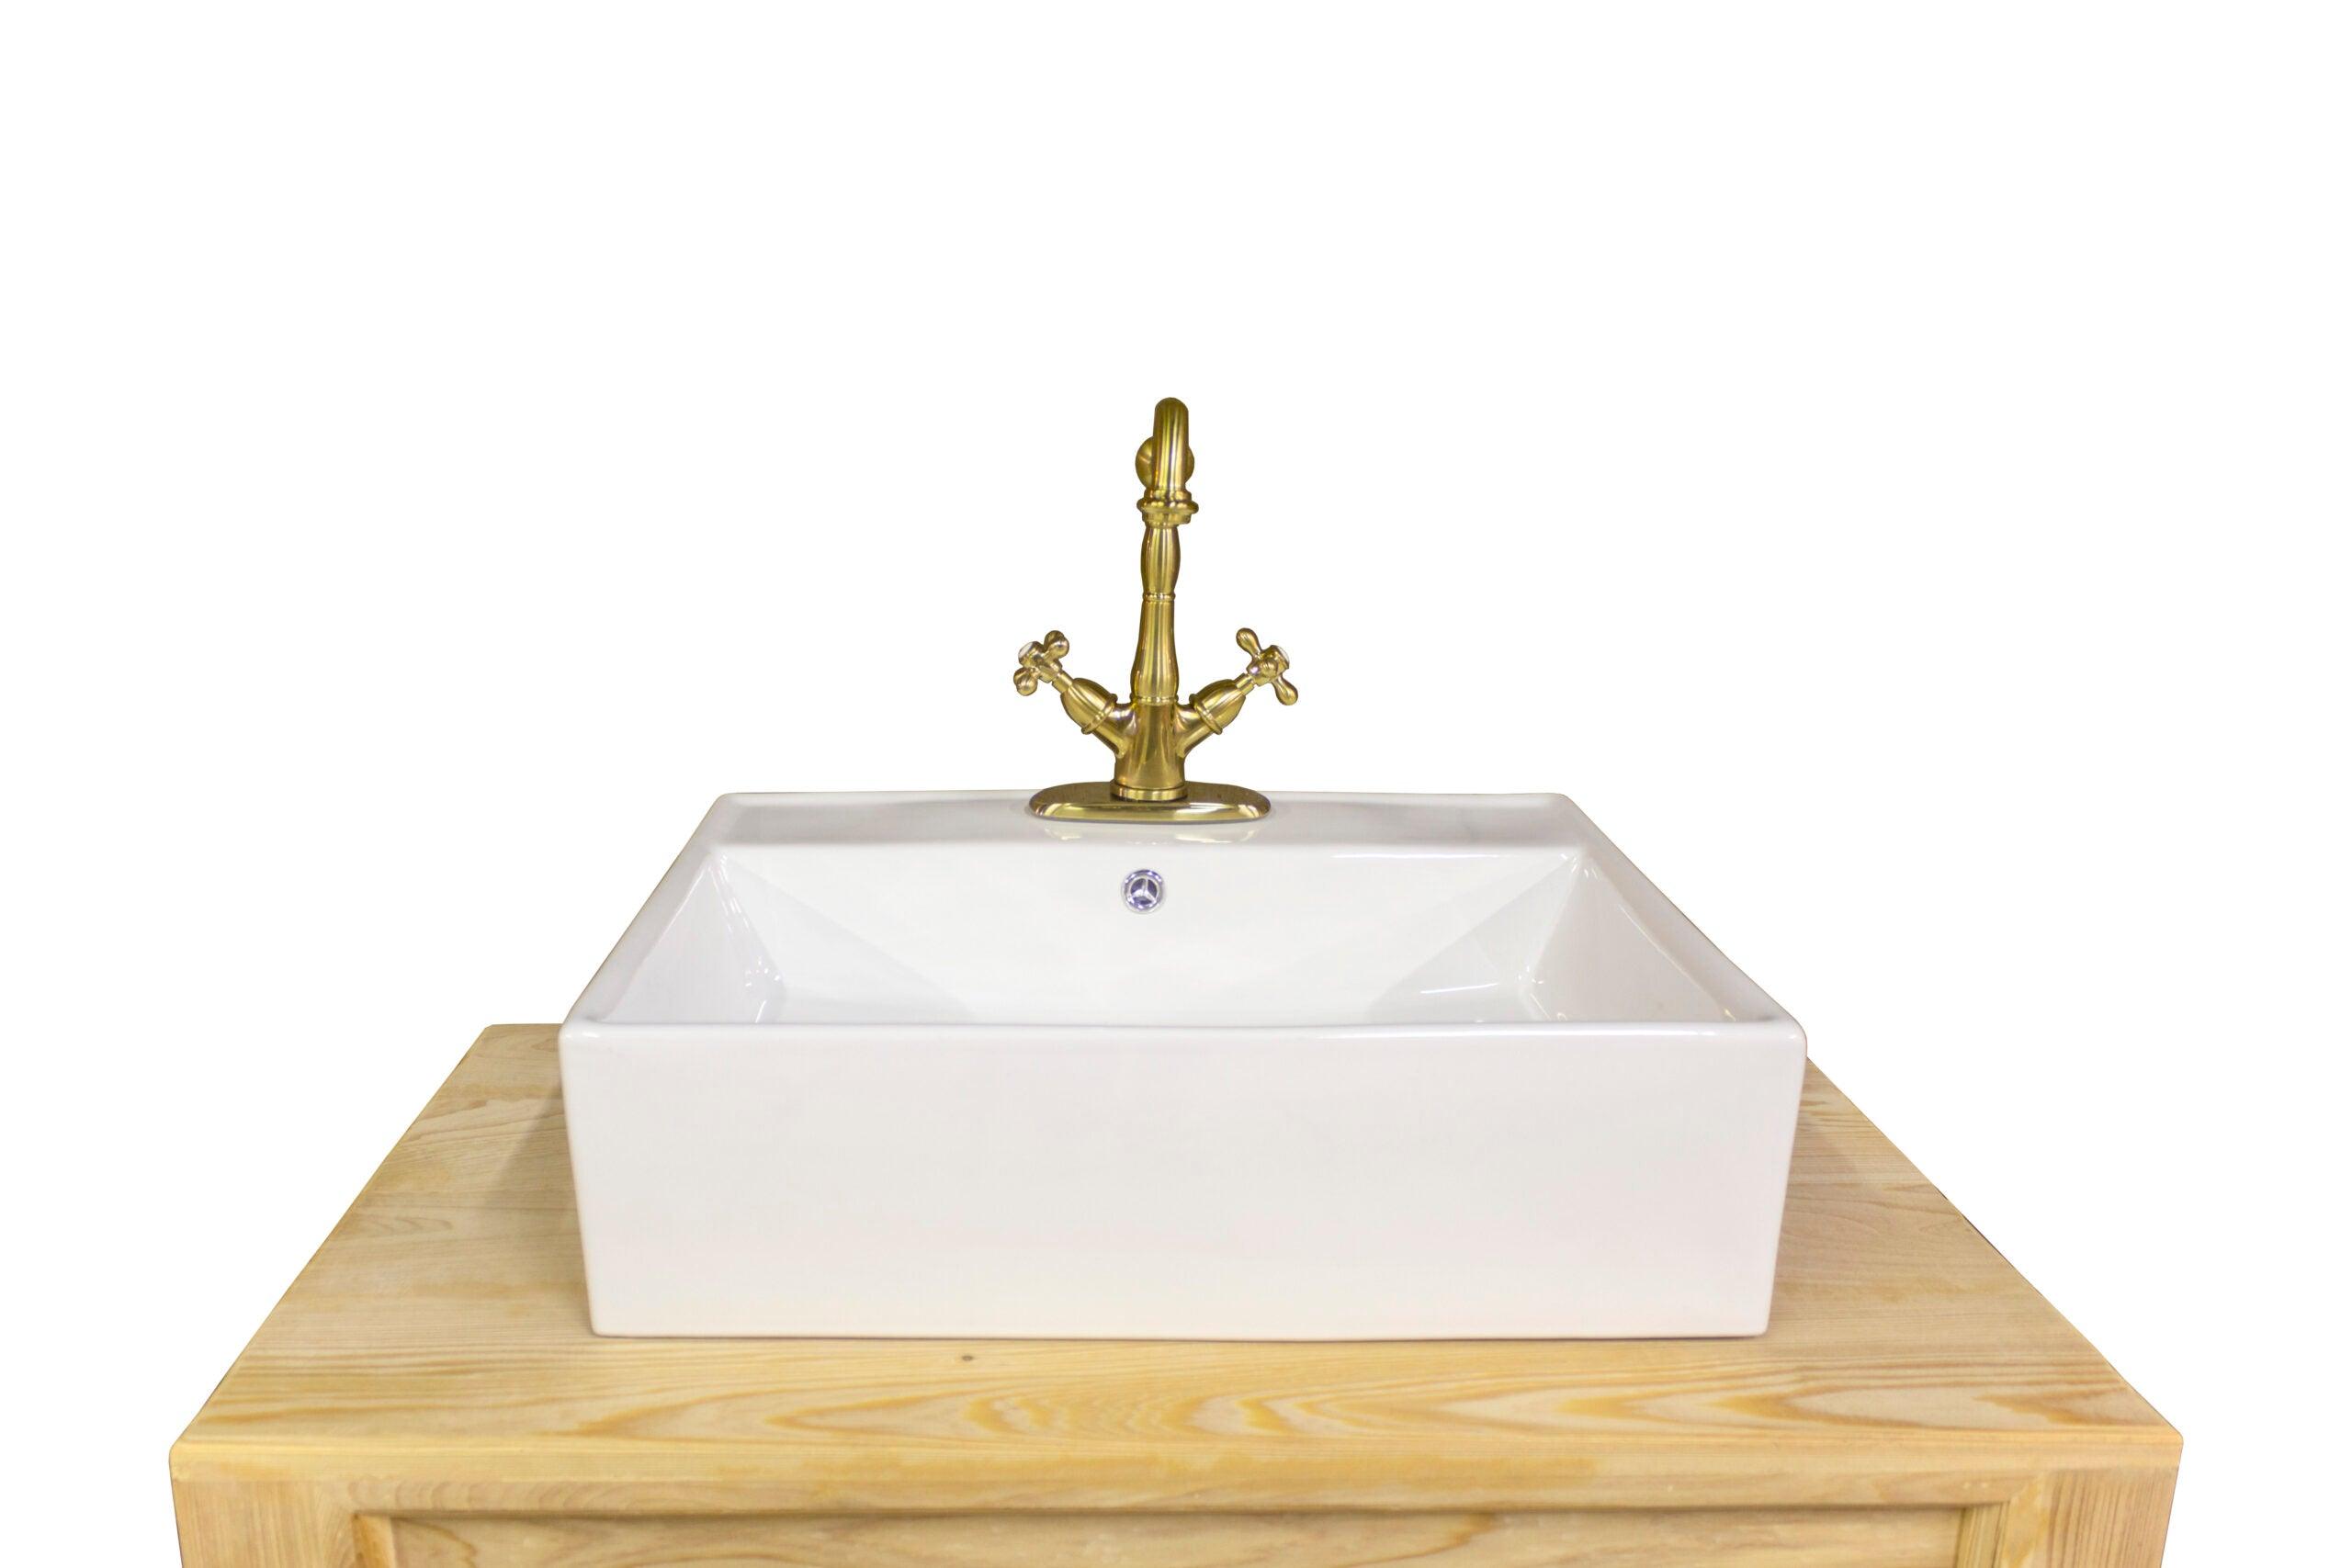 WatermarkFixtures Richland Louisiana Cypress 36″ Single Bath Vanity, Open Shelf Single Bath Console Vessel Sink - Bathroom Design Center